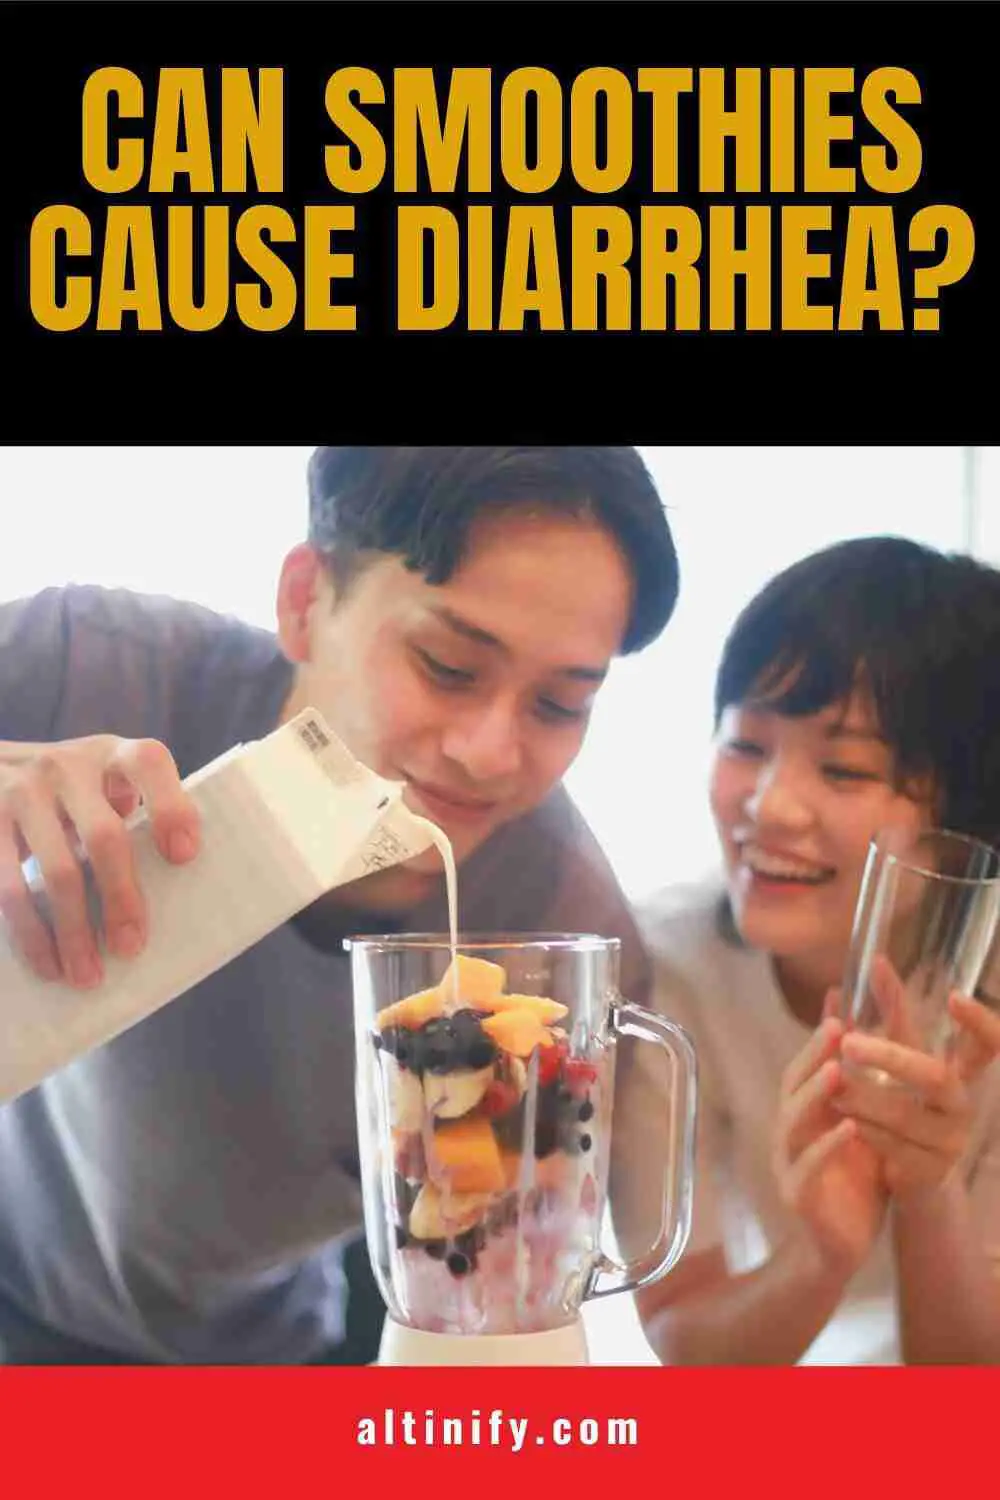 Can Smoothies Cause Diarrhea?